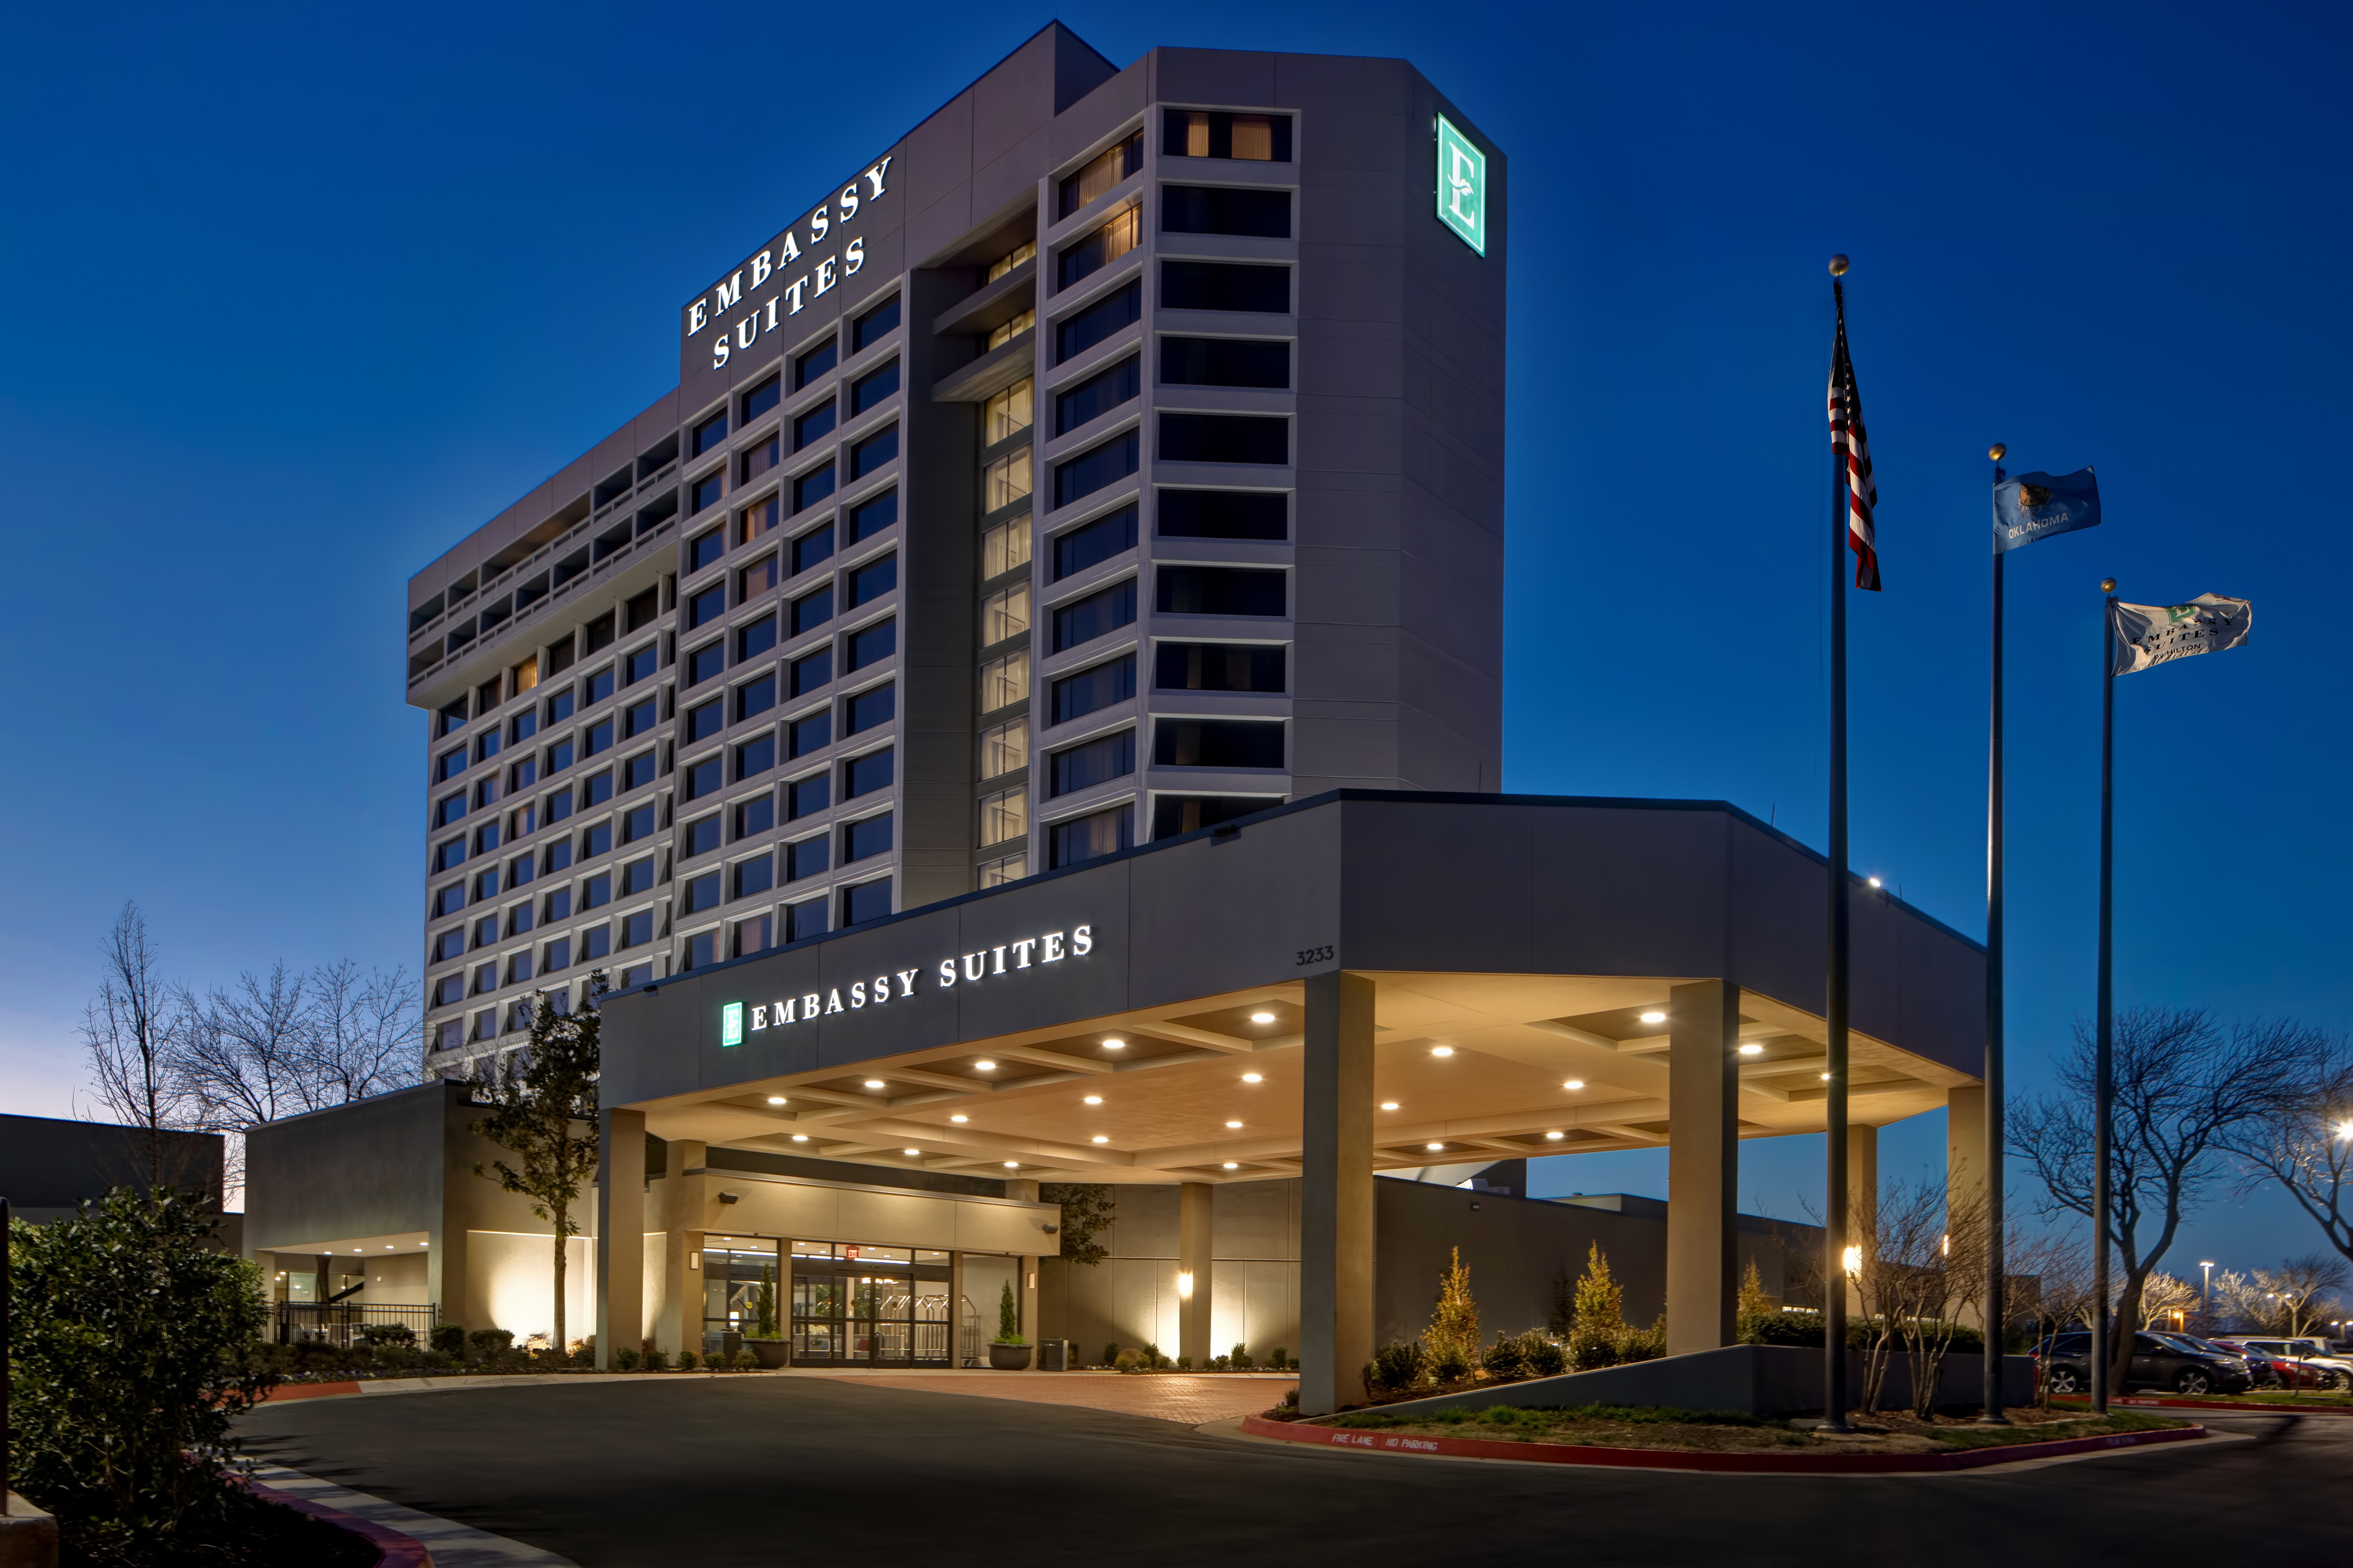 Hotel Embassy Suites by Hilton Santa Ana Orange County Airport, Santa Ana -  Reserving.com